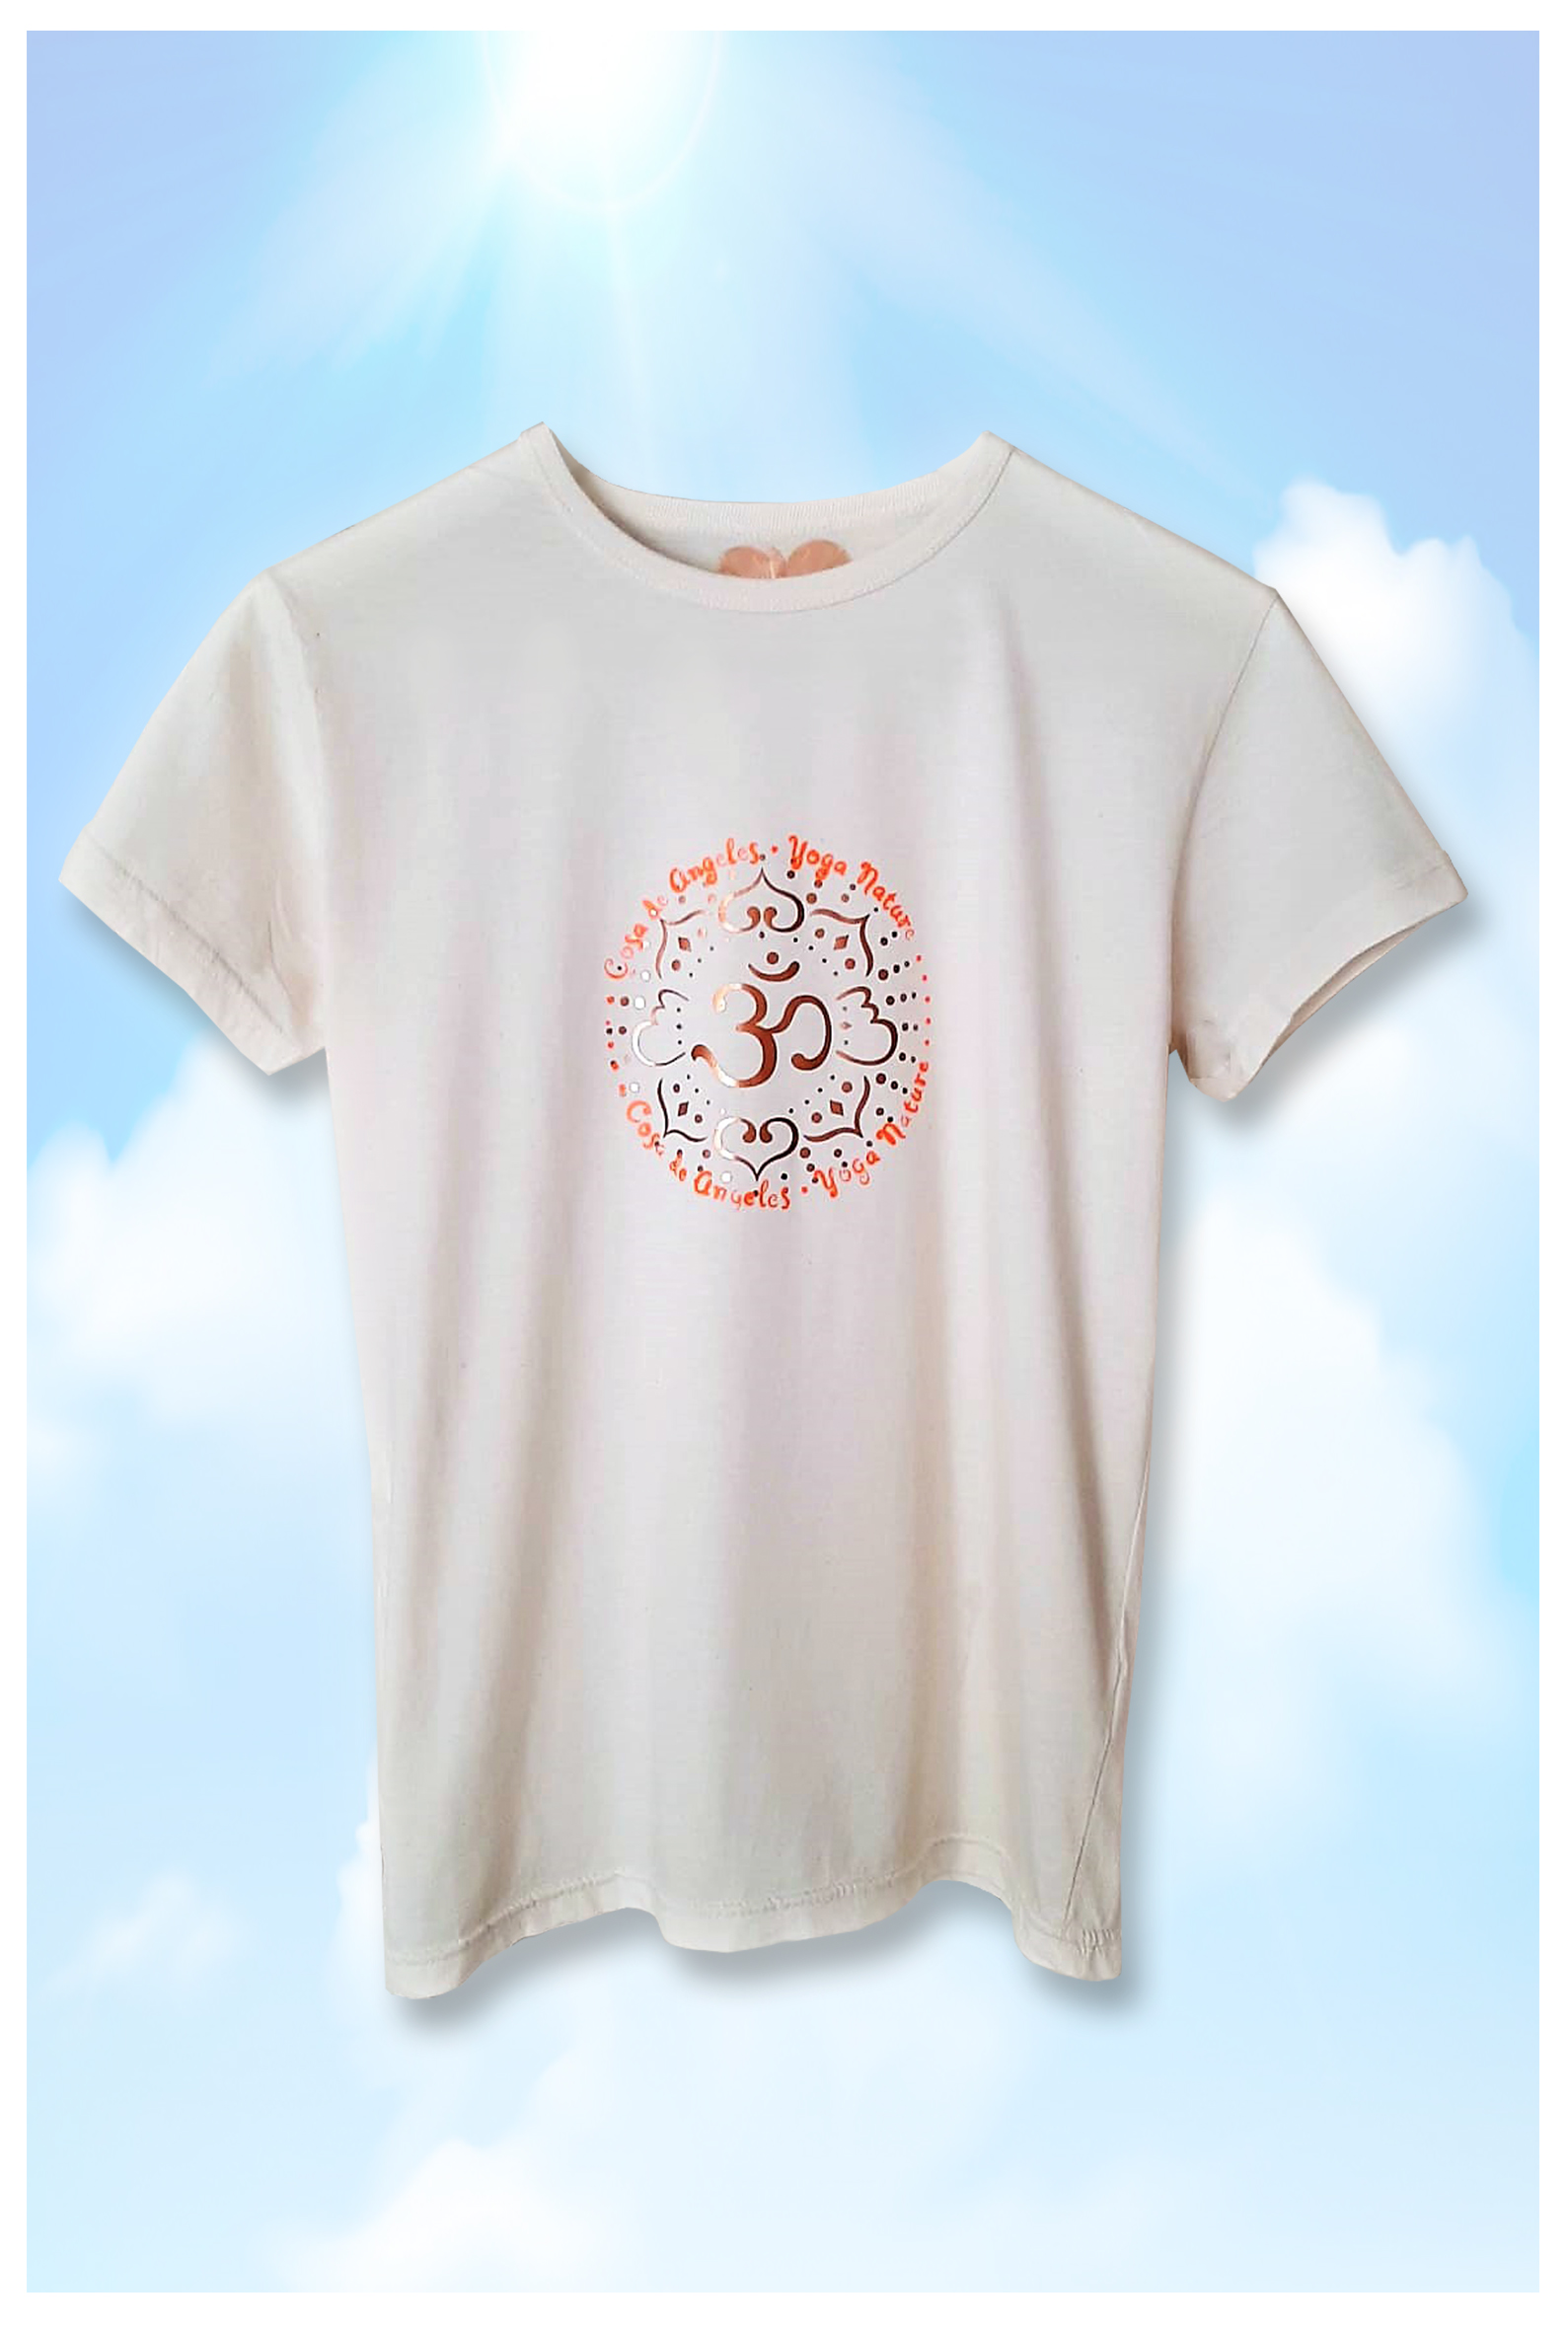 Camiseta manga corta algodón orgánico Respira YogaRespira paz